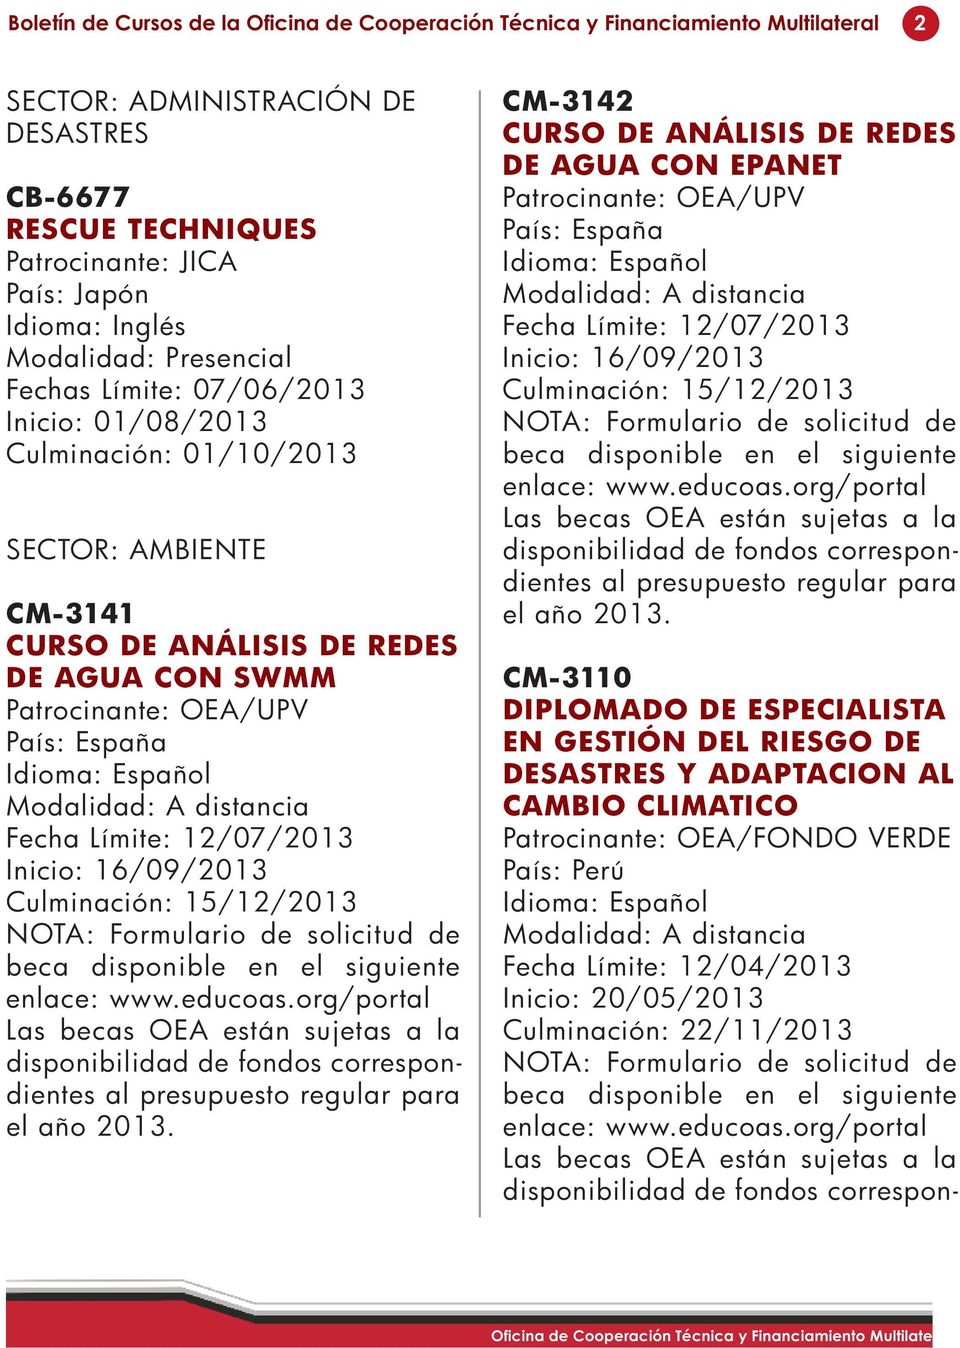 ANÁLISIS DE REDES DE AGUA CON EPANET Patrocinante: OEA/UPV País: España Fecha Límite: 12/07/2013 Inicio: 16/09/2013 Culminación: 15/12/2013 CM-3110 DIPLOMADO DE ESPECIALISTA EN GESTIÓN